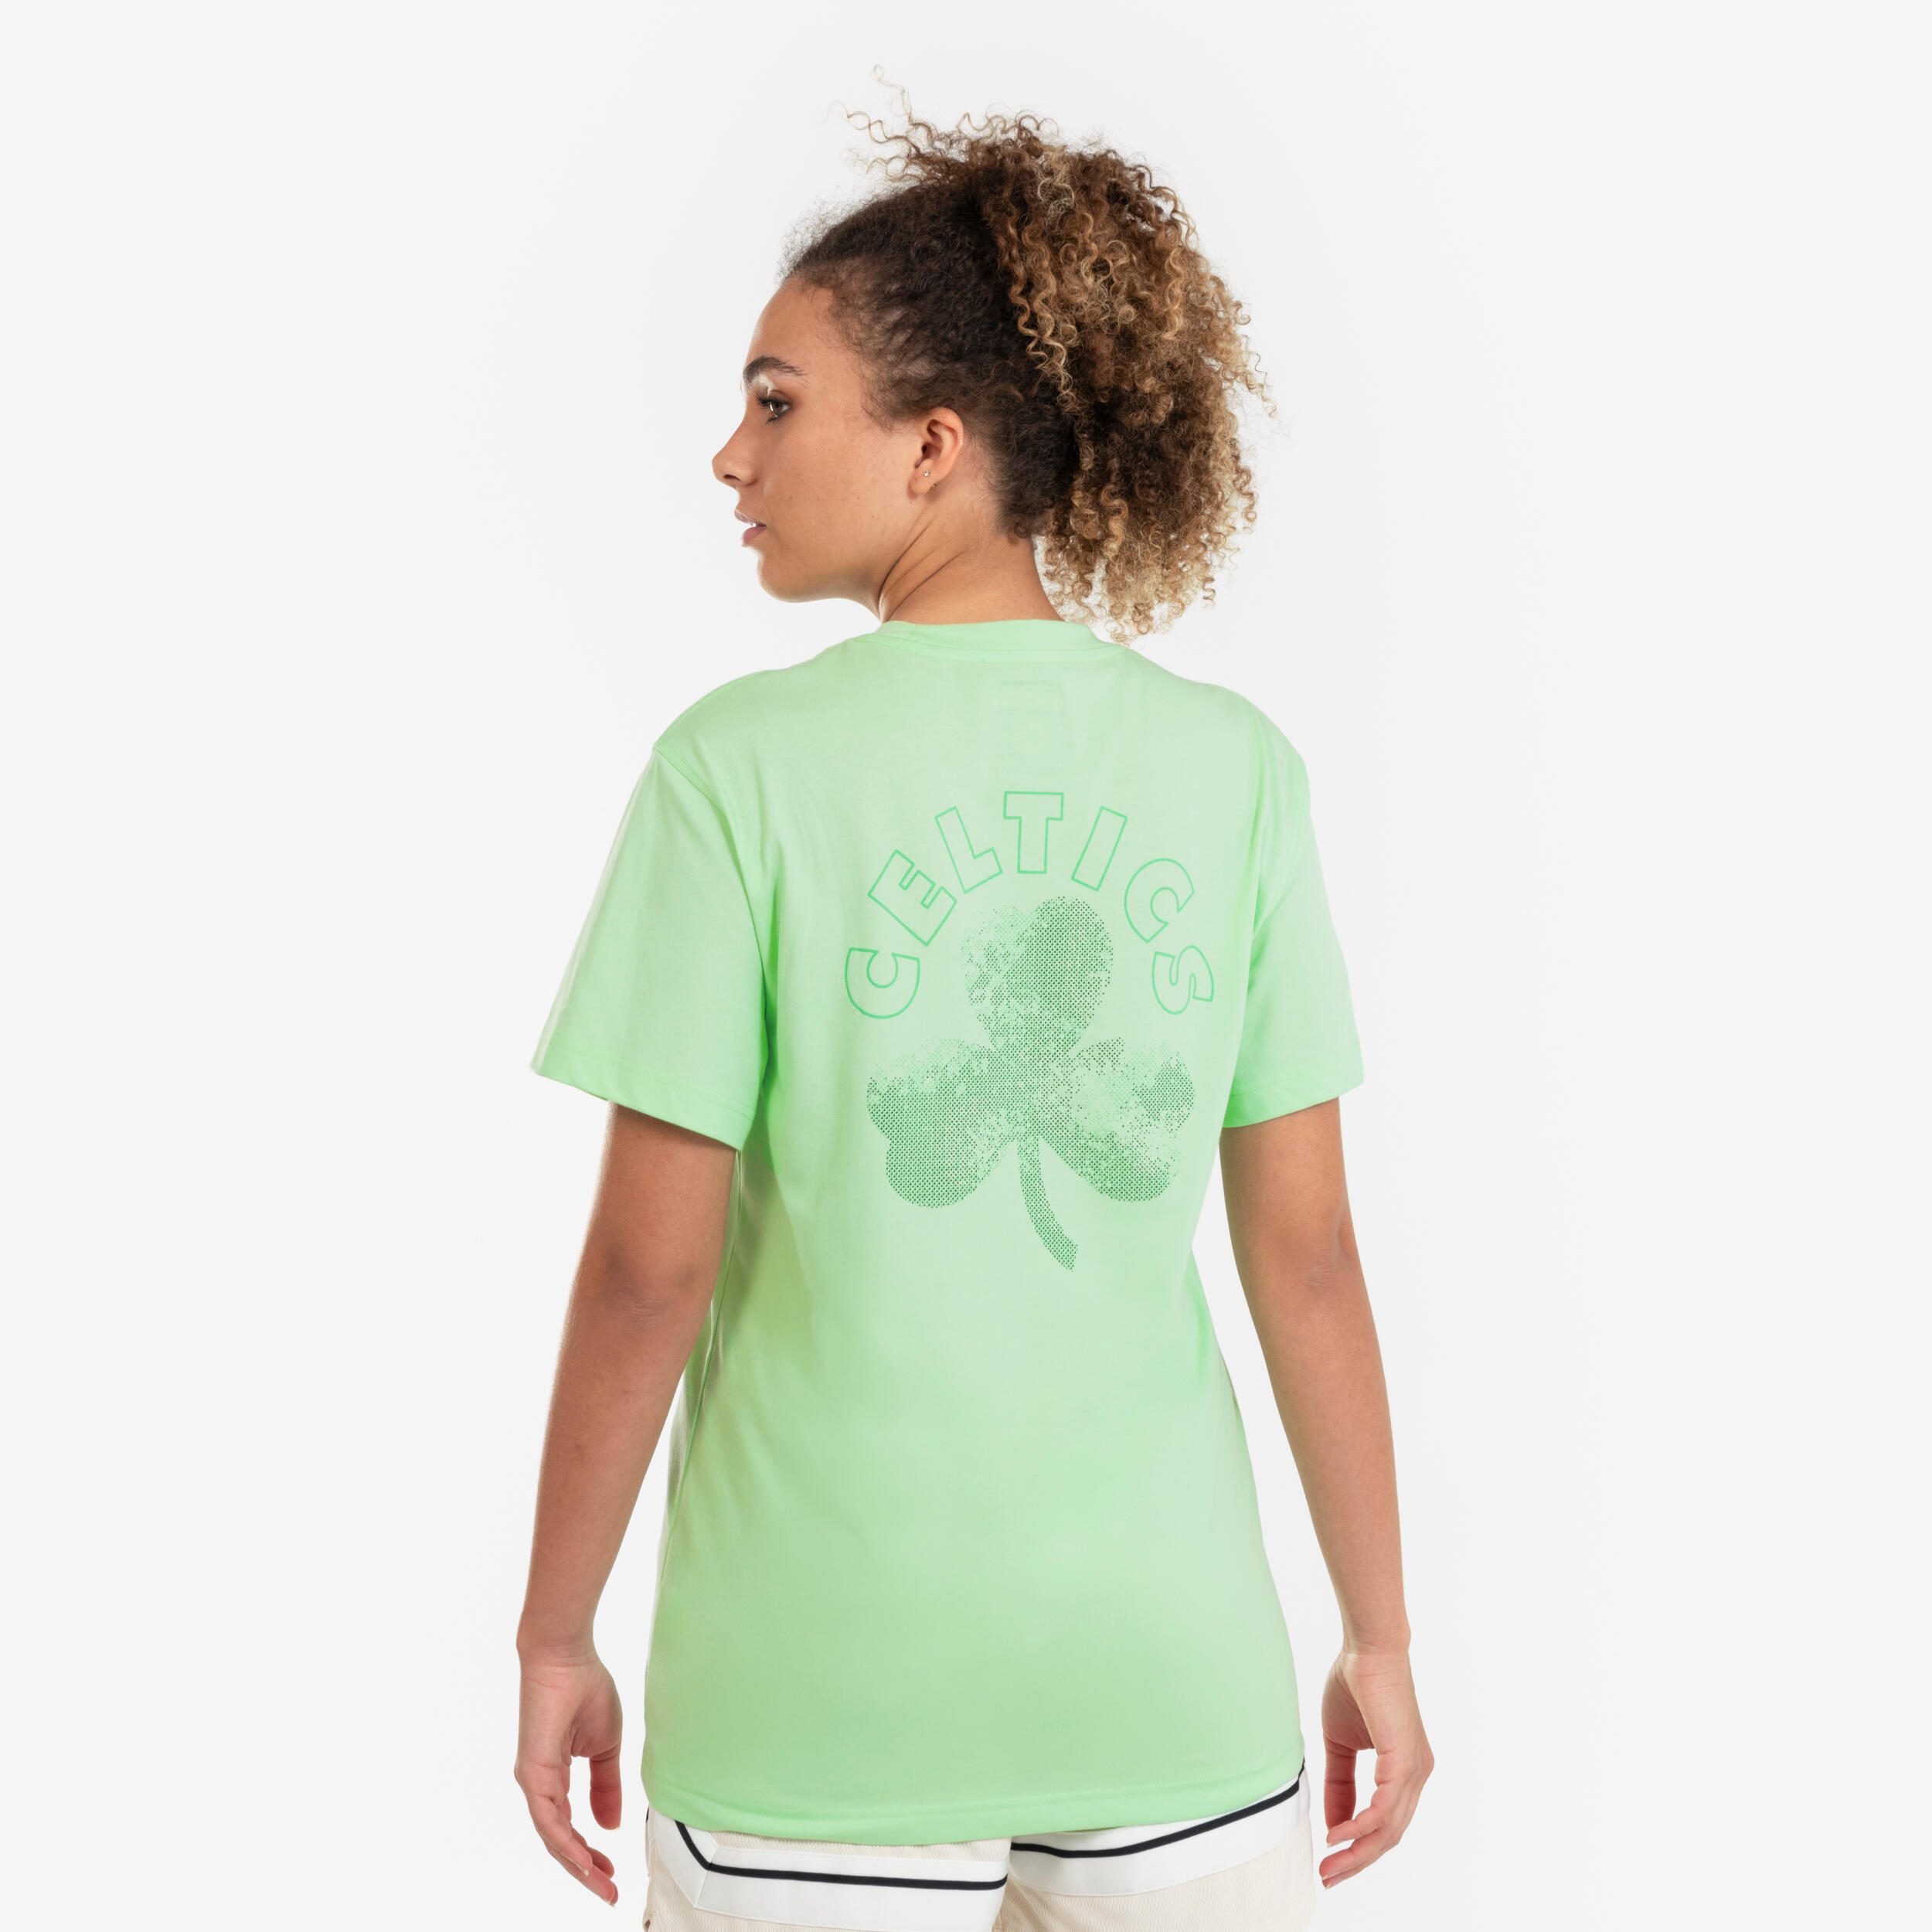 Unisex Basketball T-Shirt 900 AD - NBA Celtics/Green 5/8